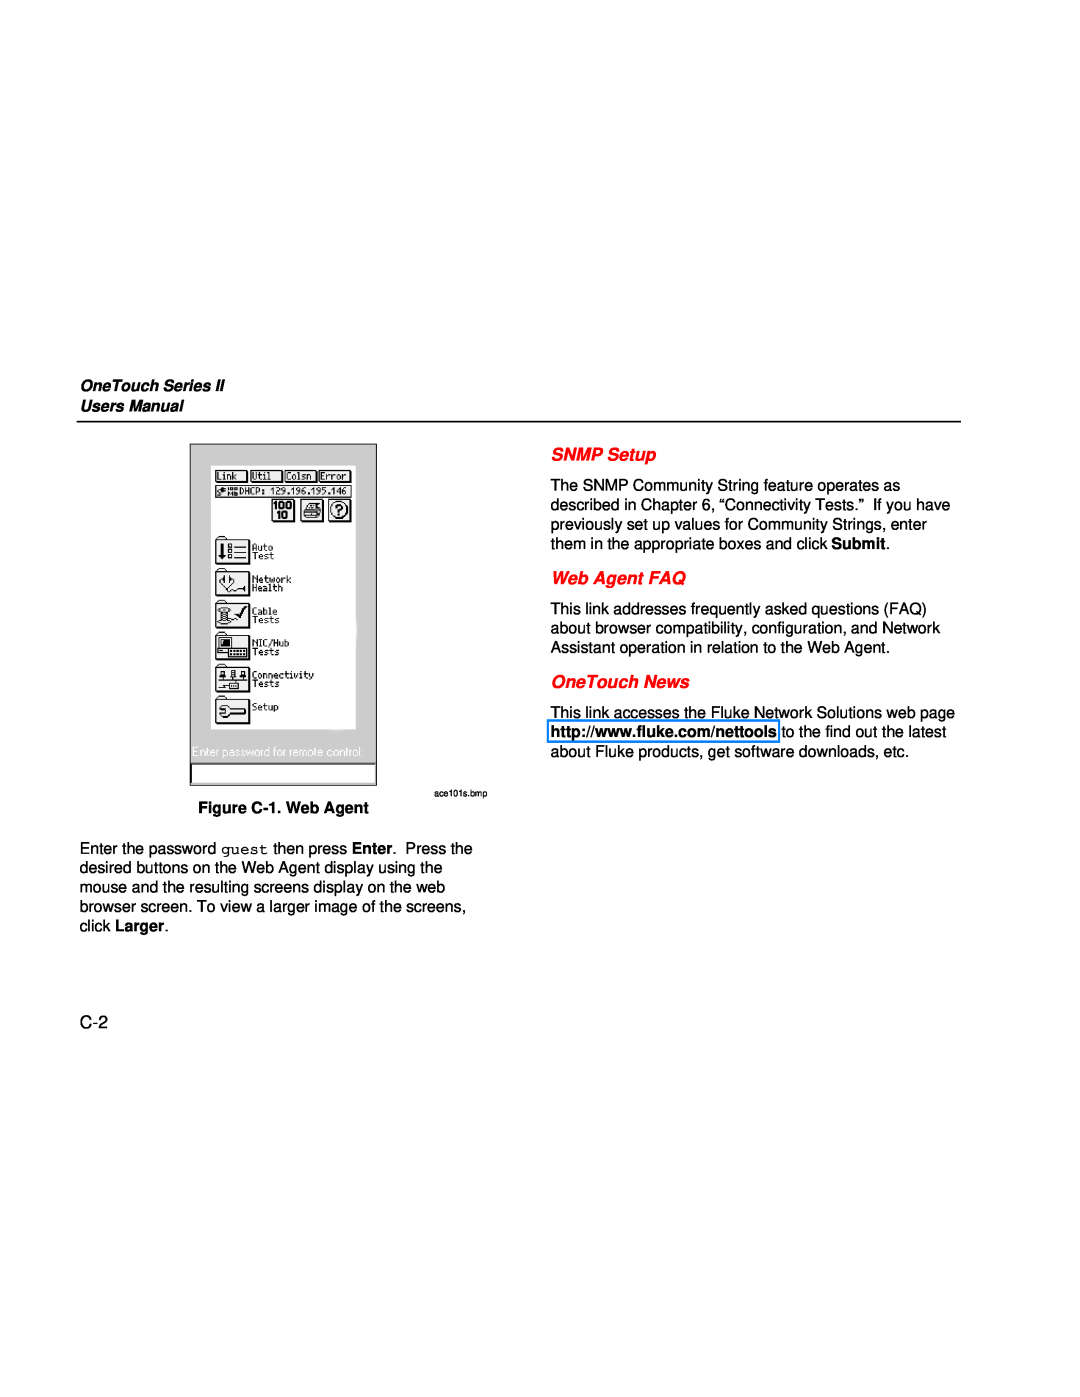 Fluke Series II user manual SNMP Setup, Web Agent FAQ, OneTouch News, OneTouch Series Users Manual, Figure C-1. Web Agent 